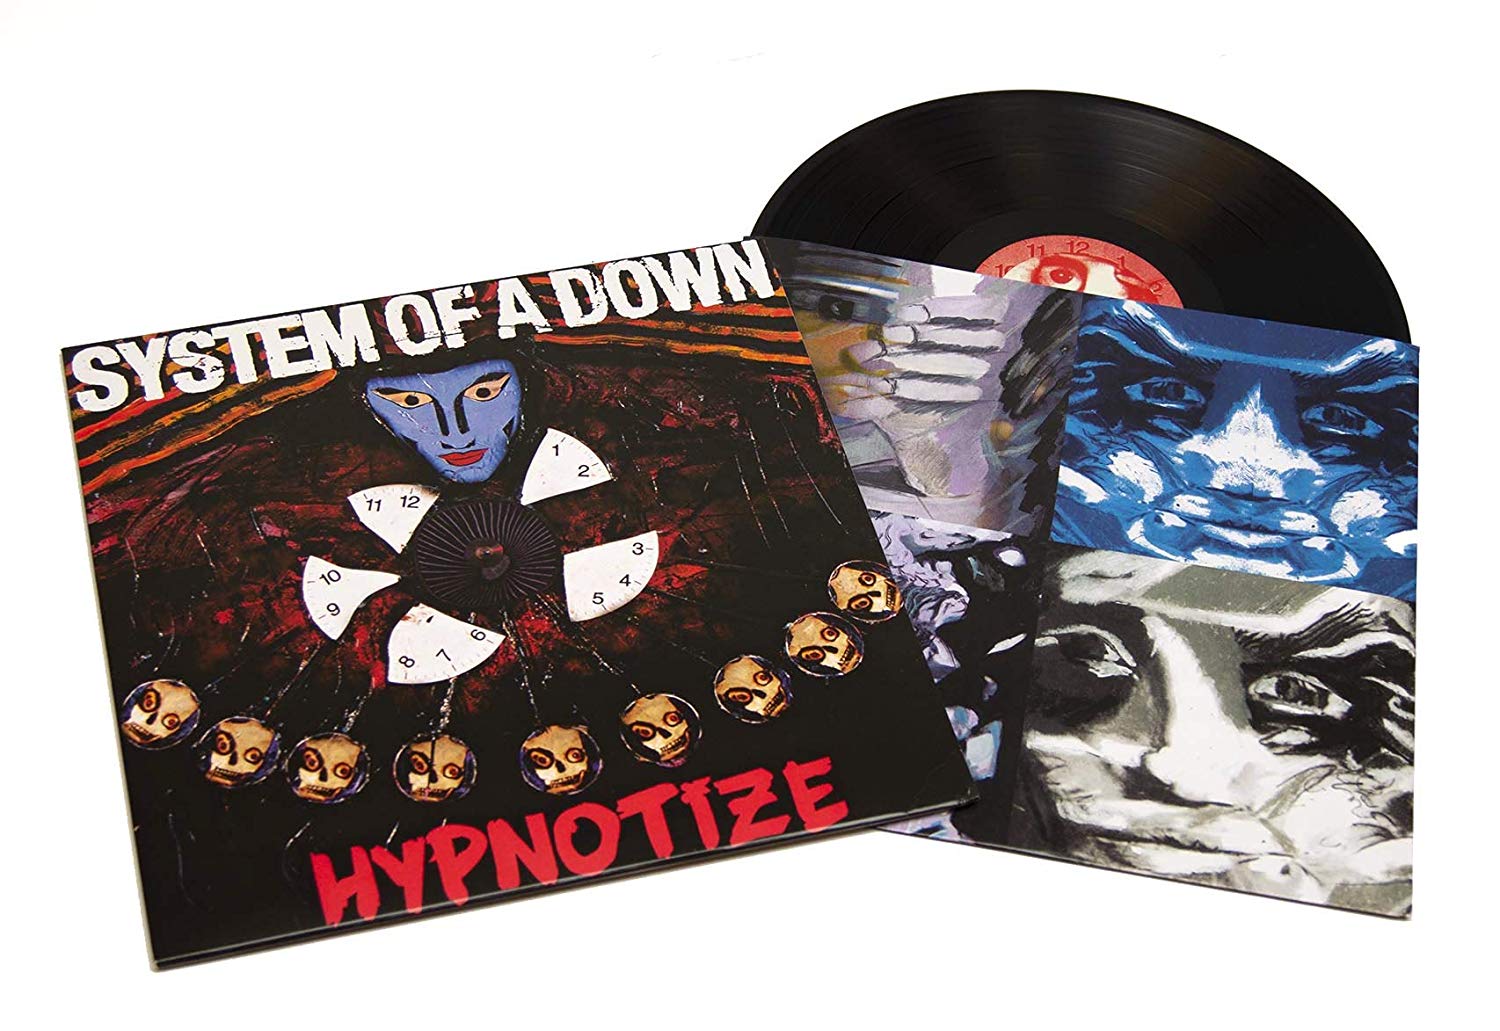 hypnotize system of a down vinyl